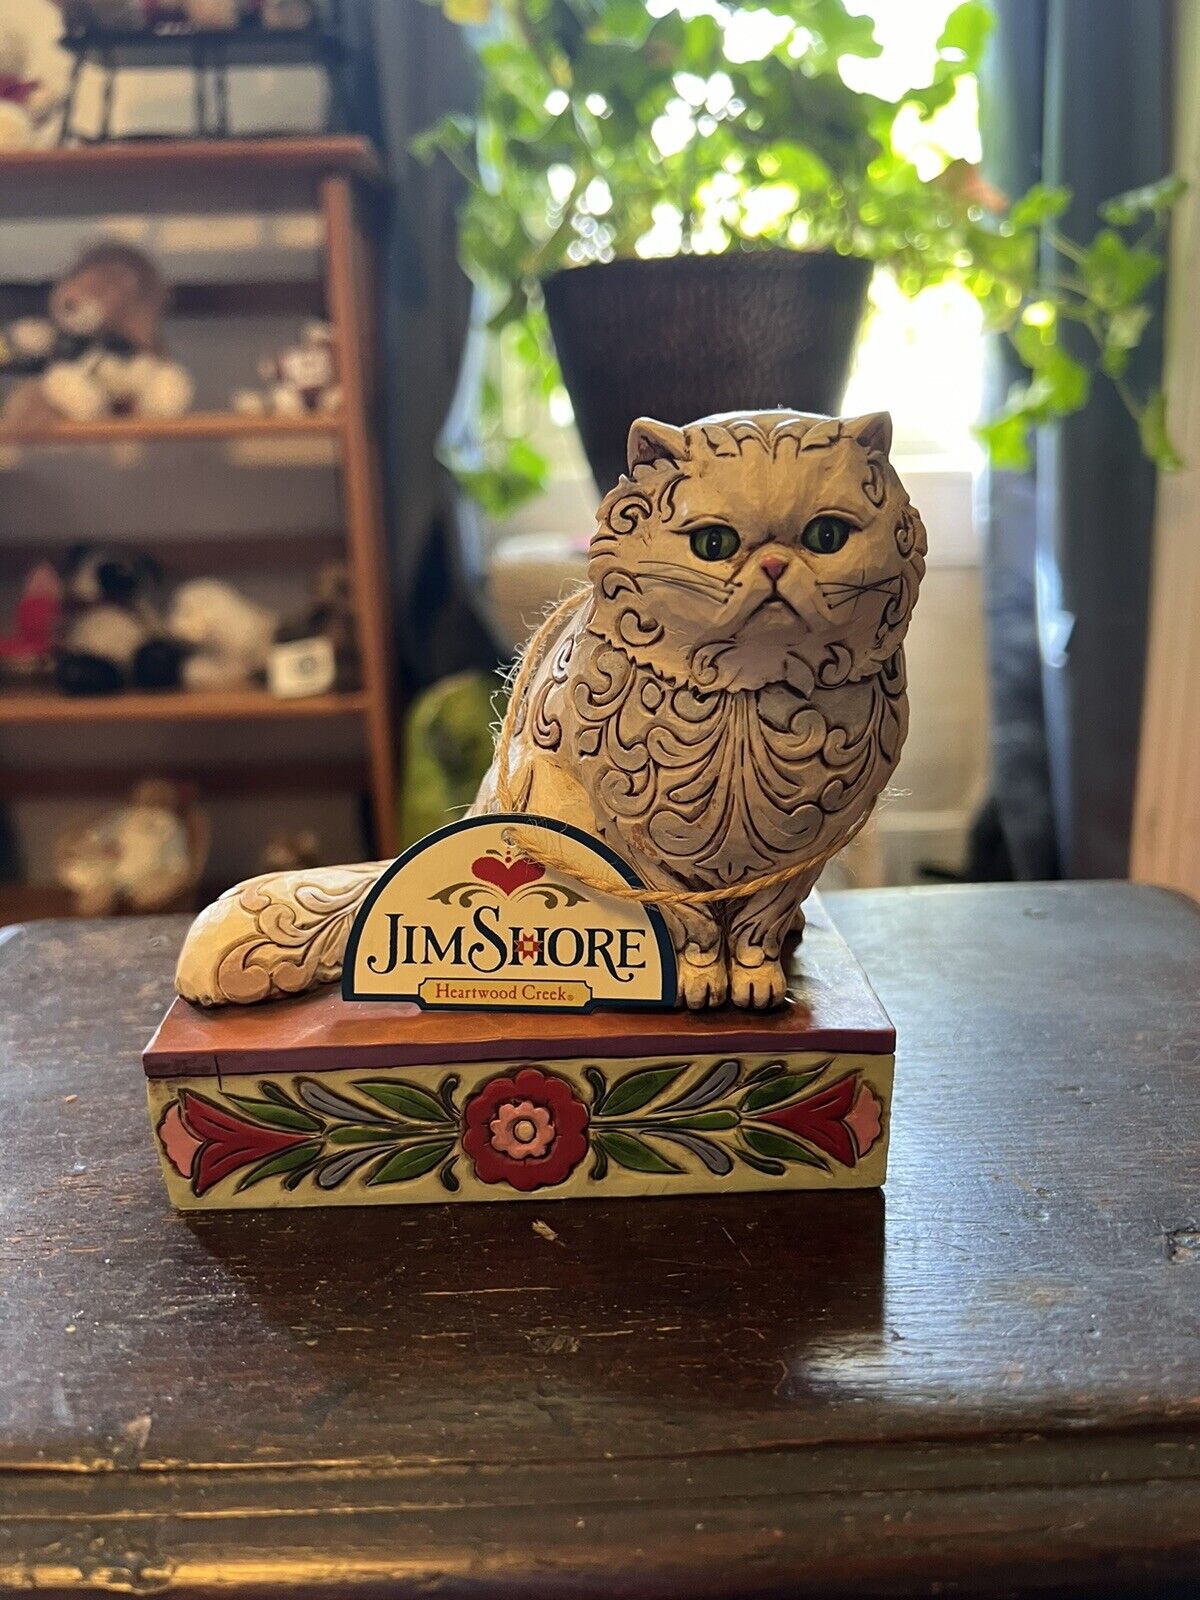 Jim Shore persian cat figurine “Victoria”